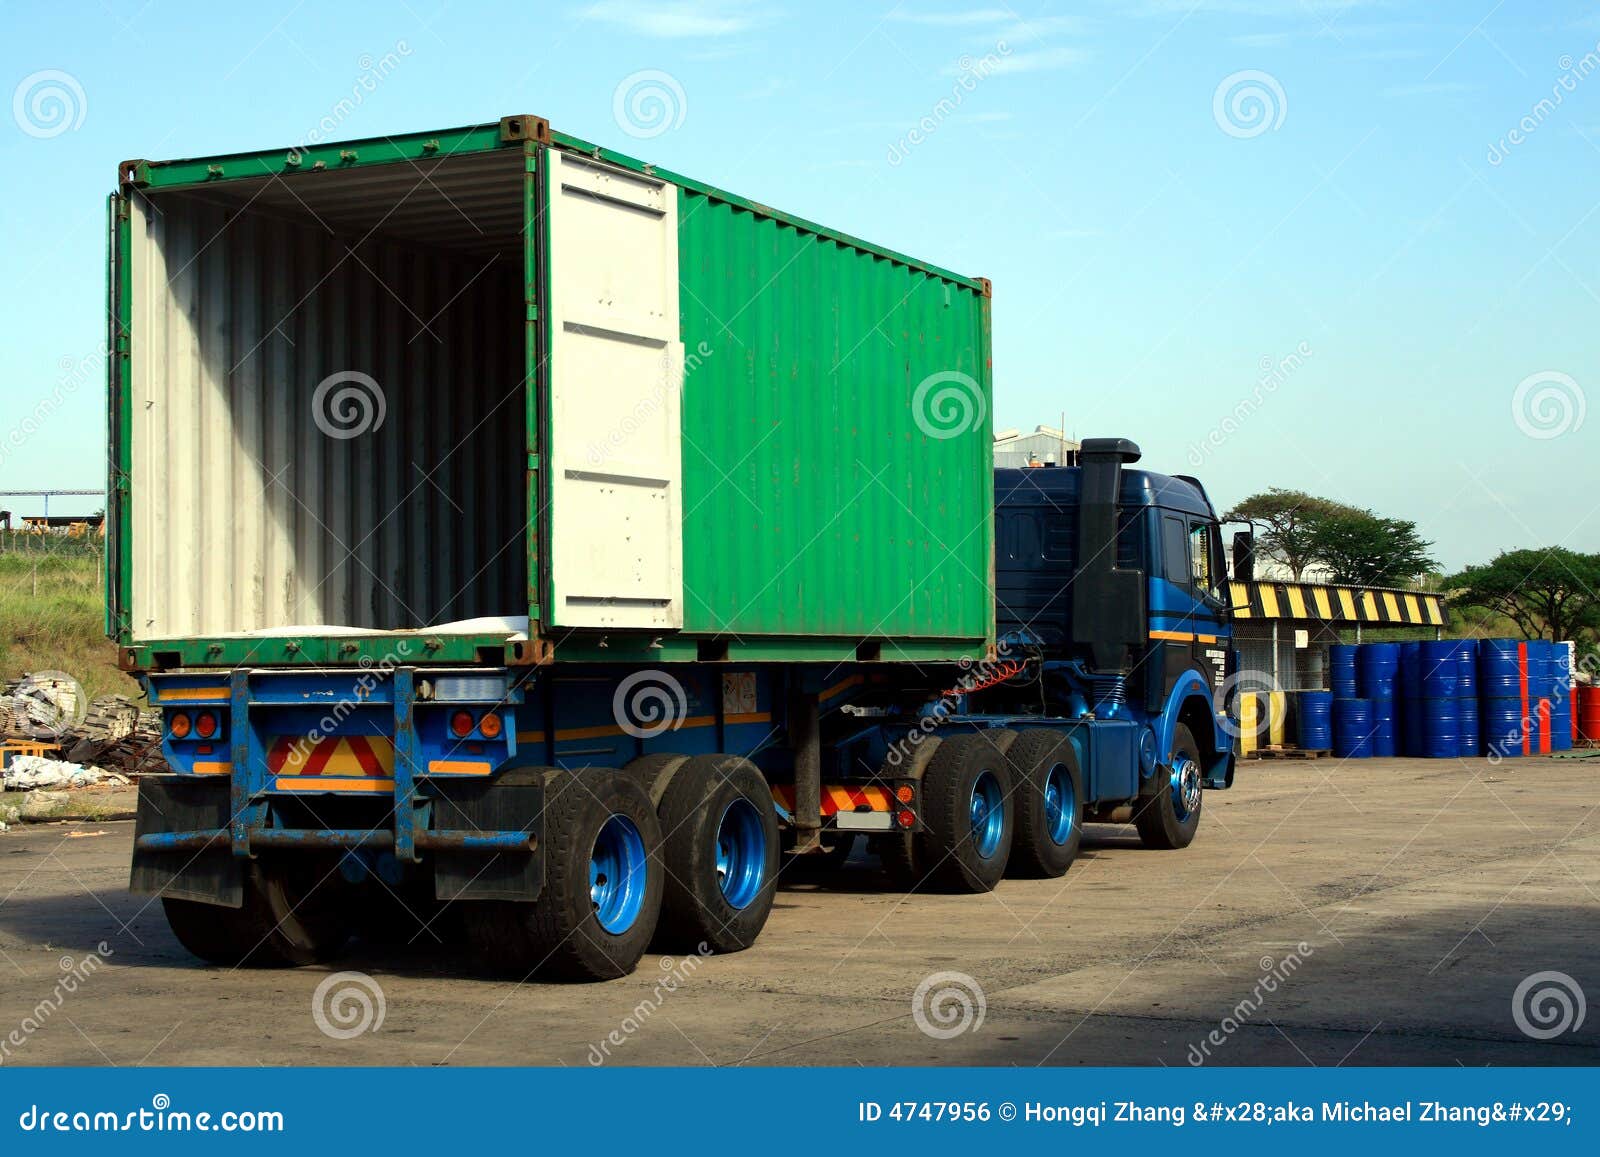 empty-container-truck-4747956.jpg